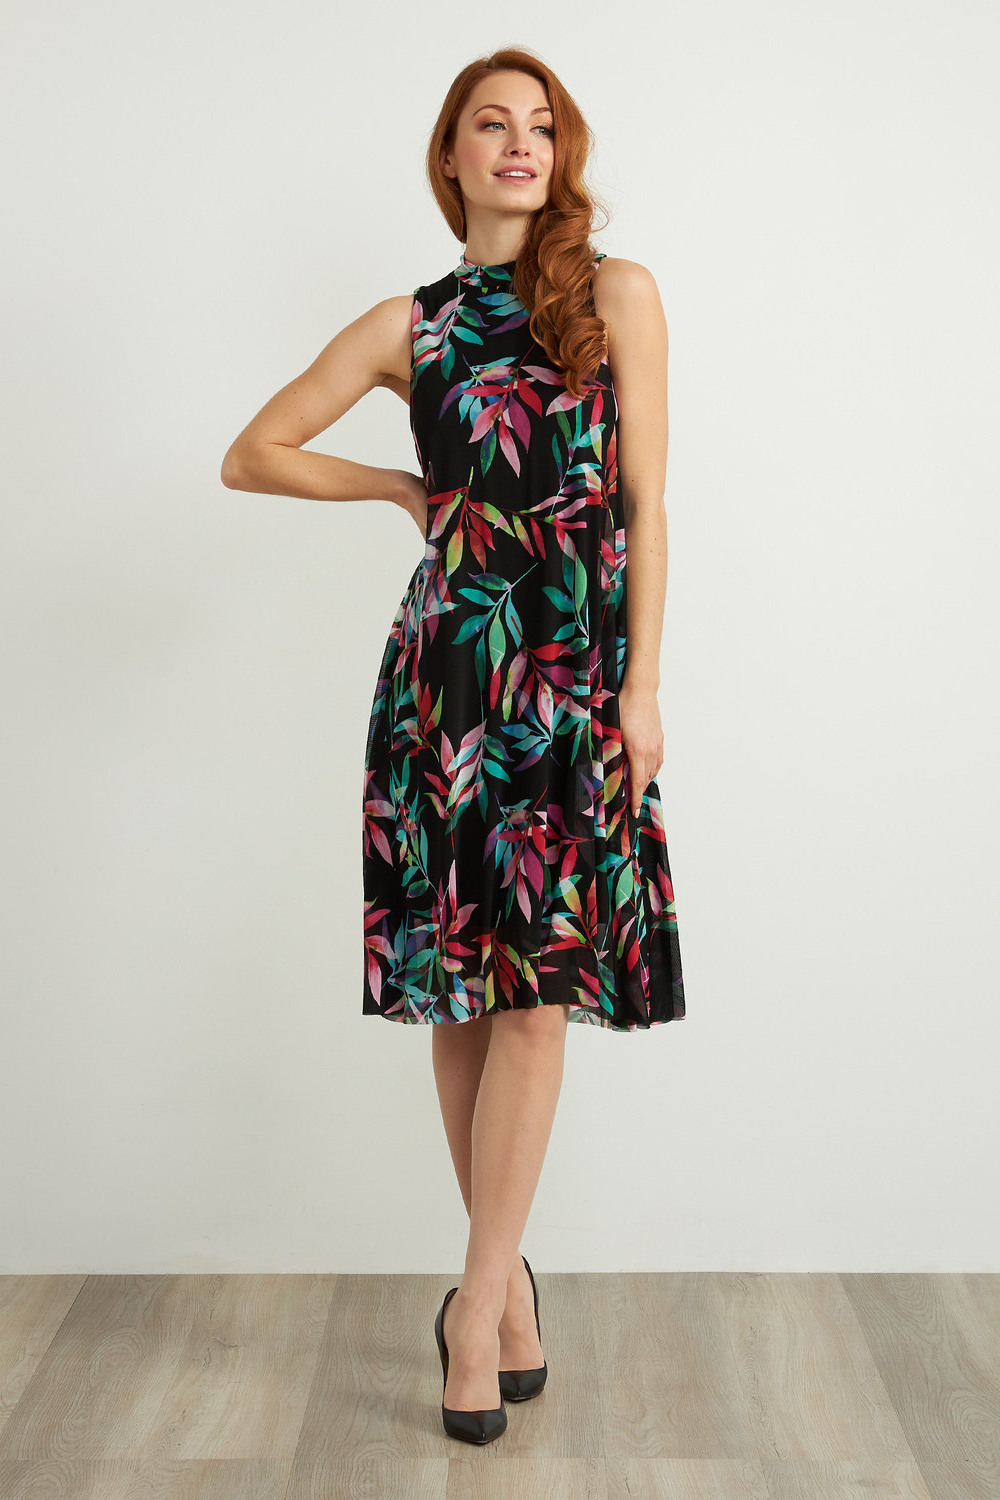 Joseph Ribkoff Floral A-Line Dress Style 211135. Black/multi